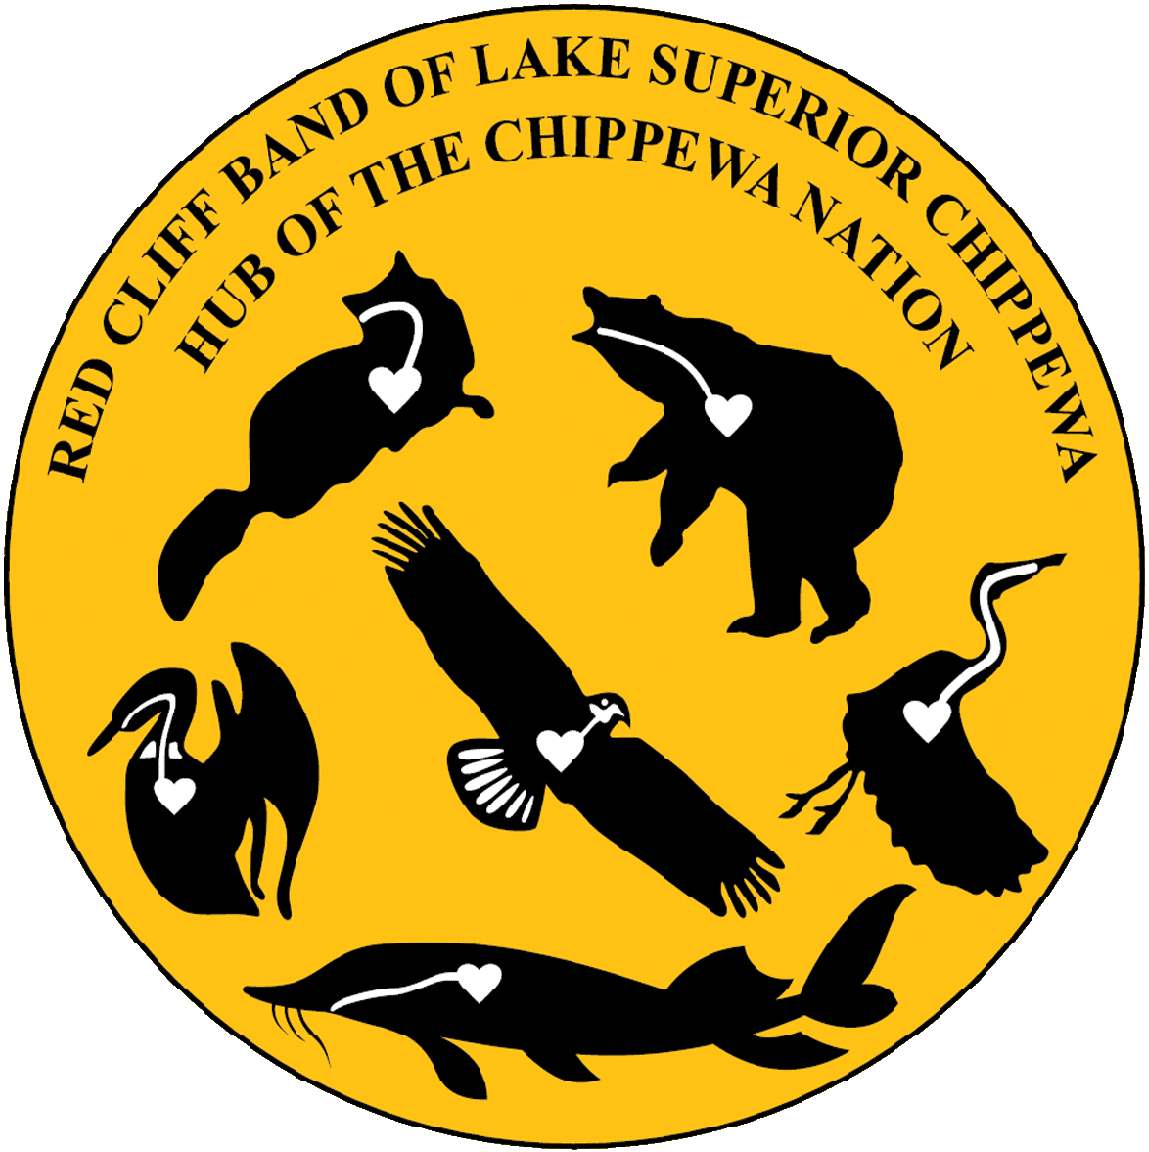 Red Cliff Band of Lake Superior Chippewa logo.png